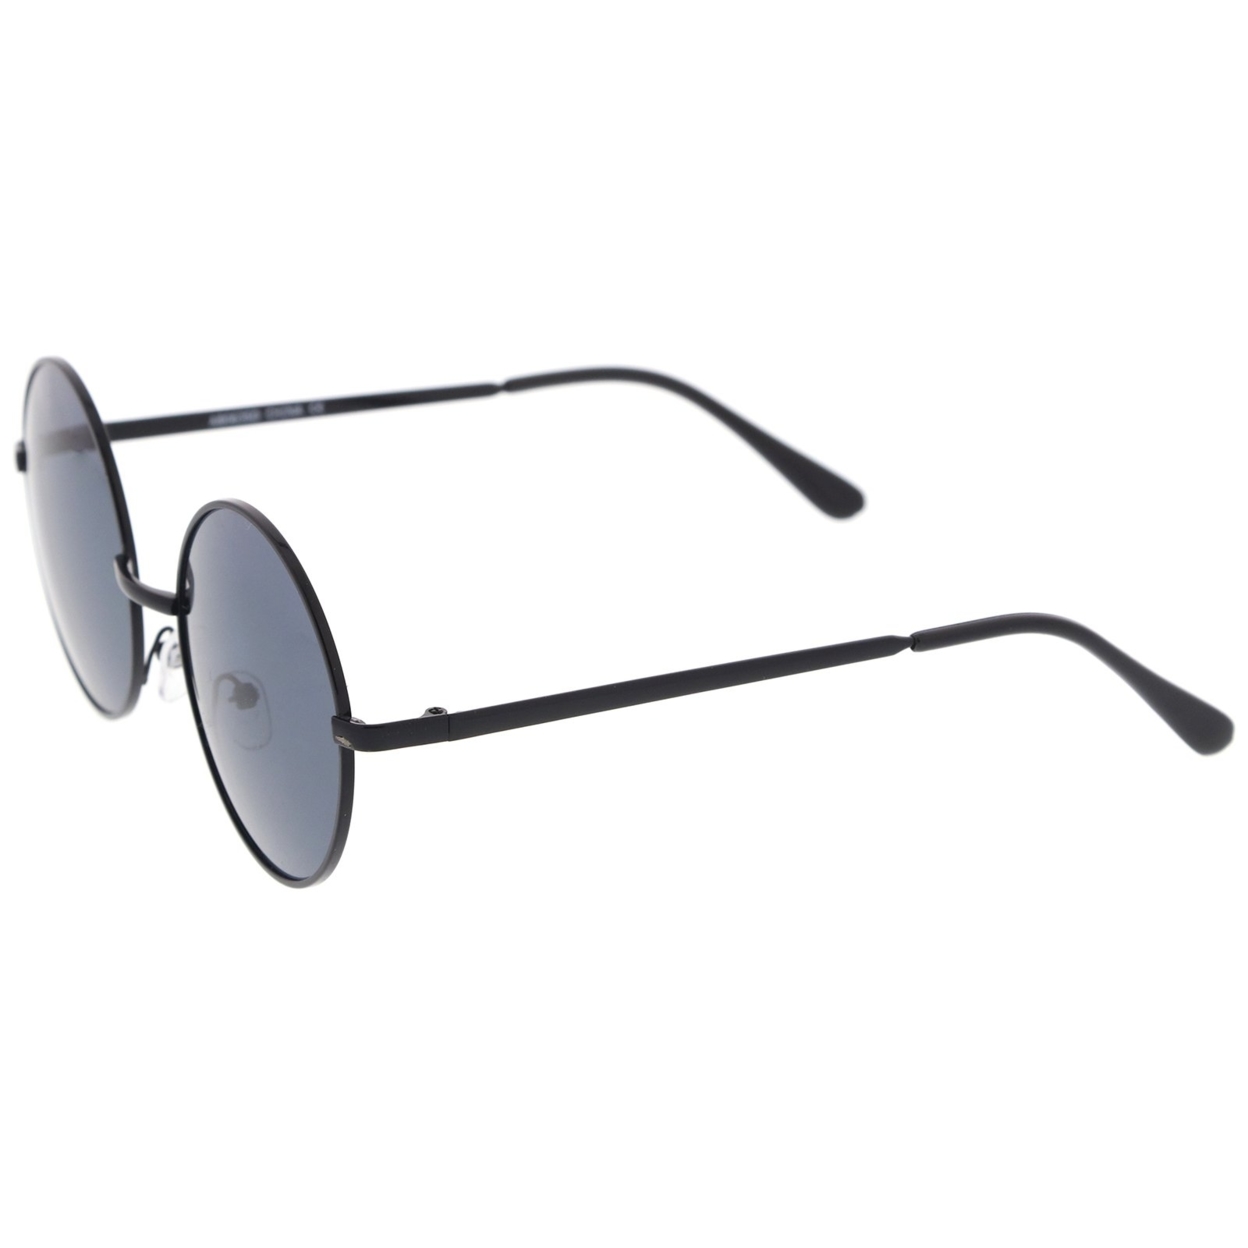 Retro Metal Frame Slim Temple Neutral-Colored Lens Round Sunglasses 51mm - Gold / Smoke